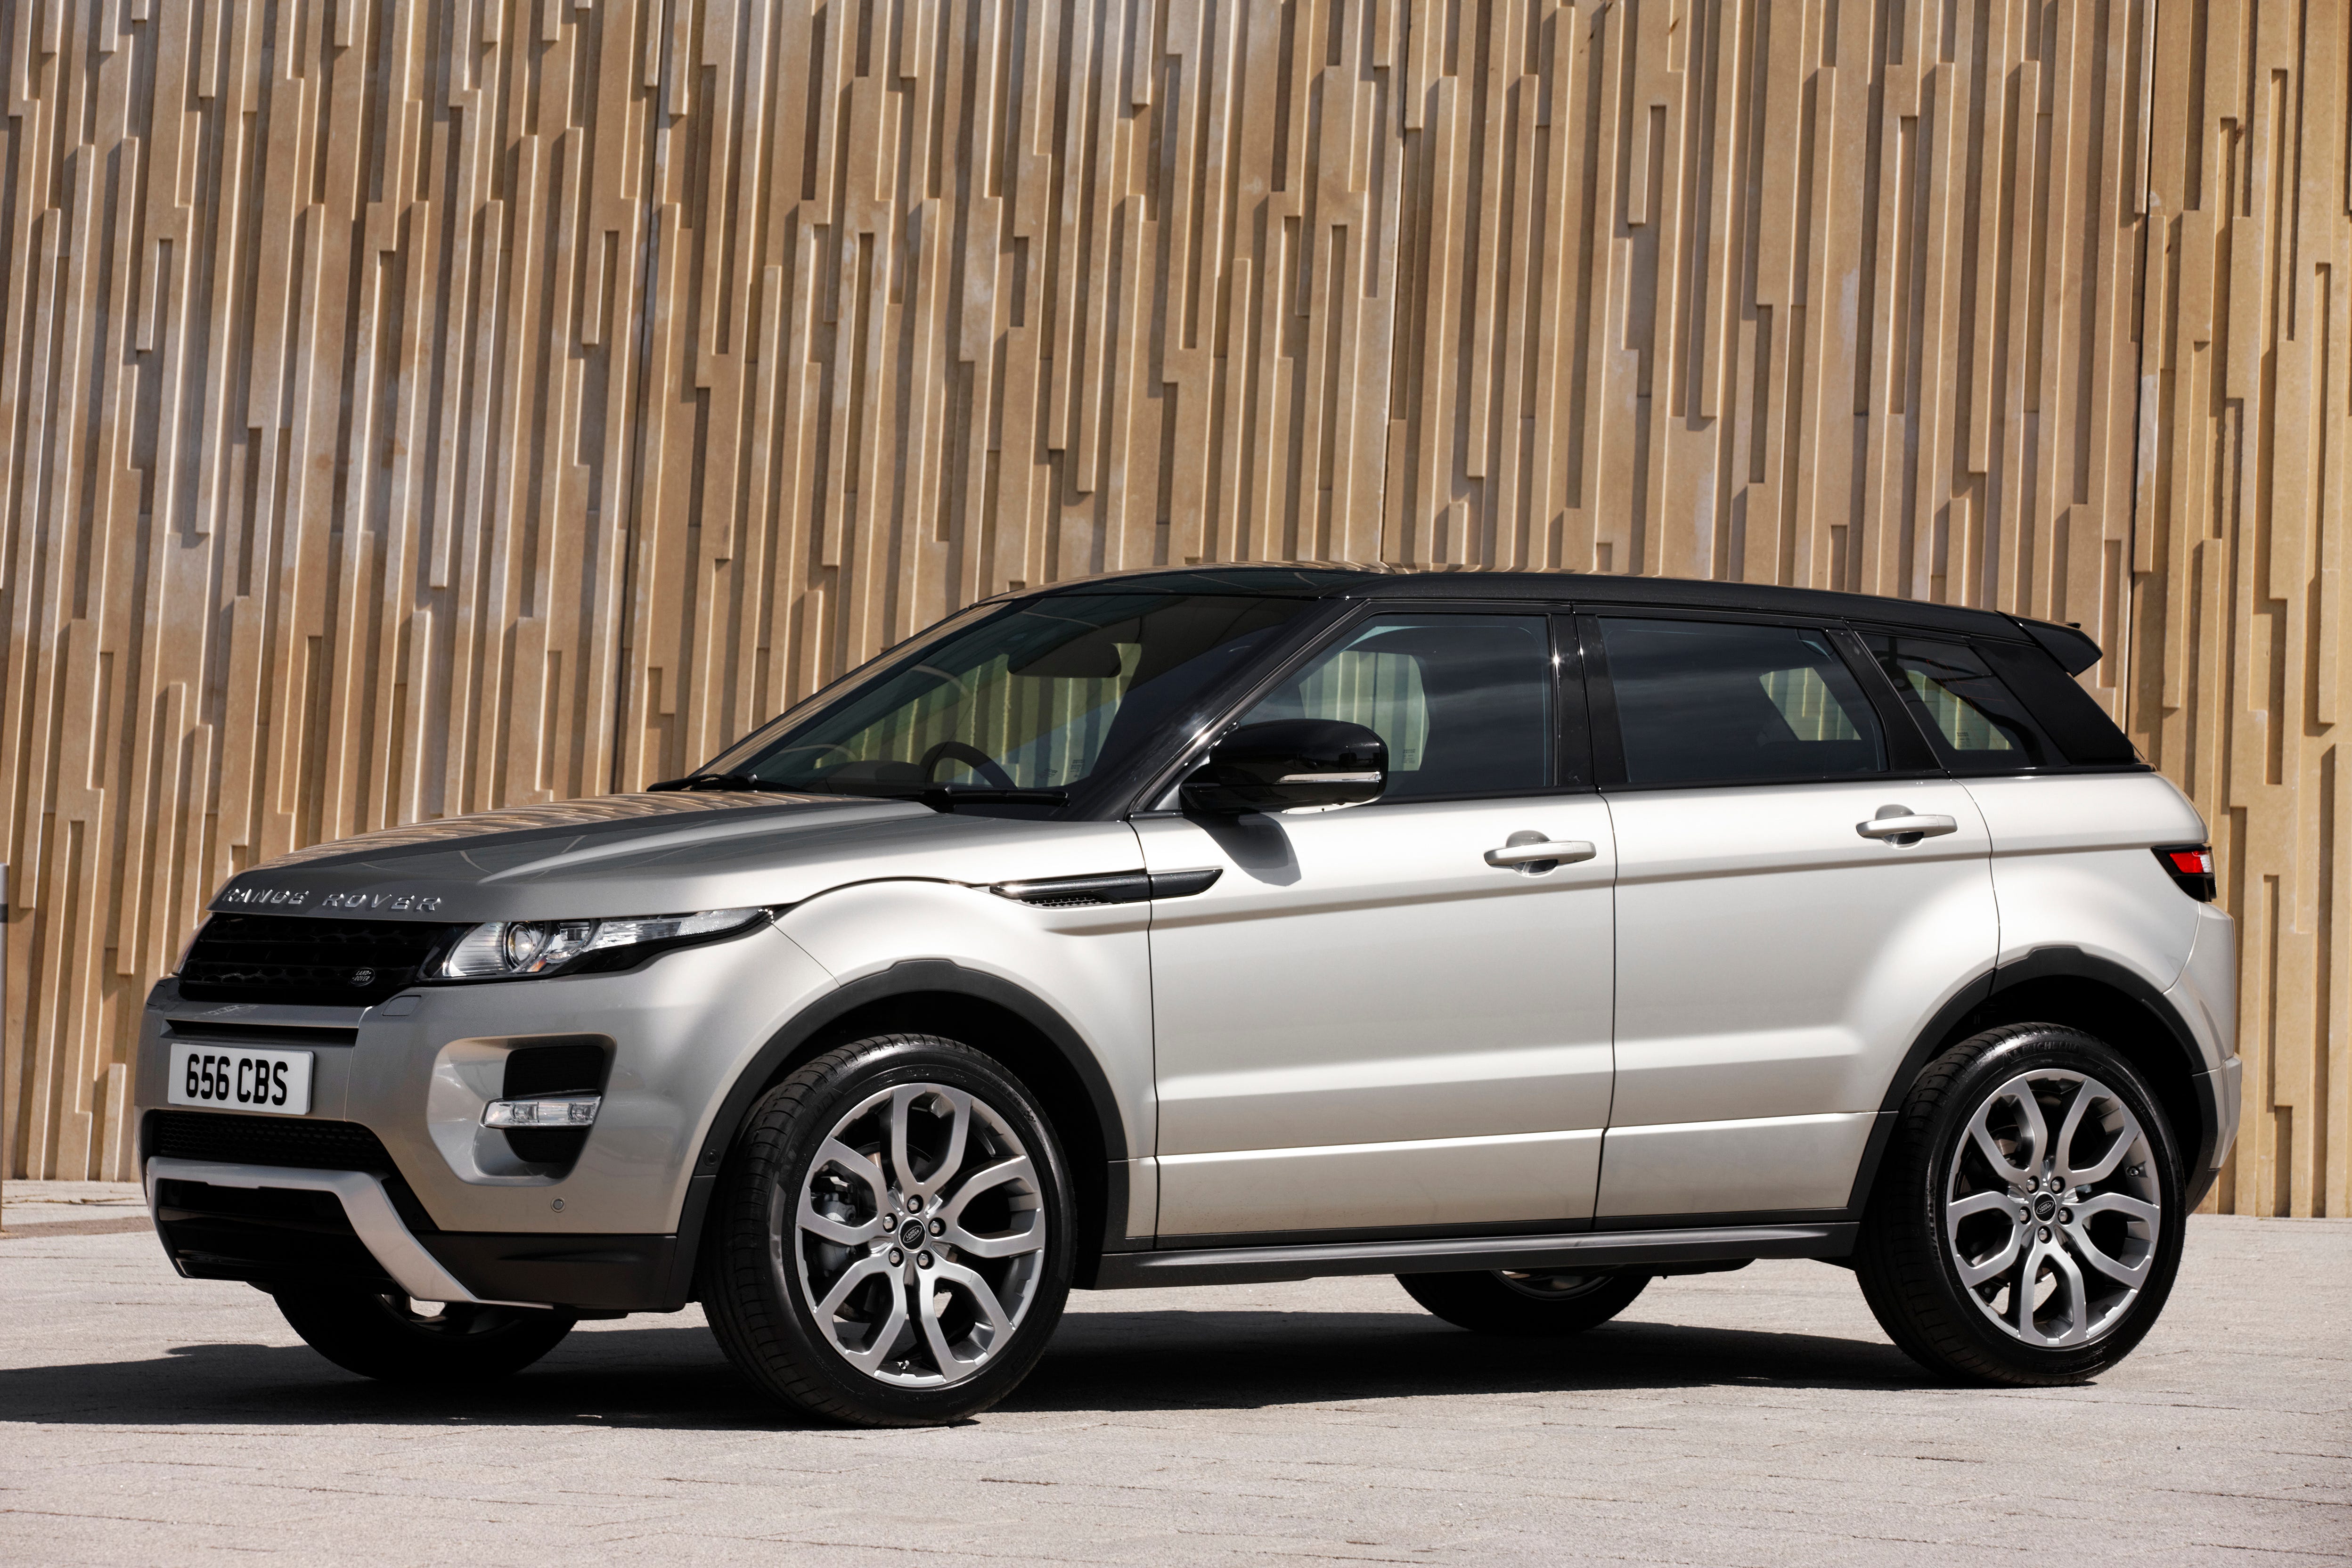 2015 Range Rover Long Wheelbase Autobiography Review  AutoGuidecom